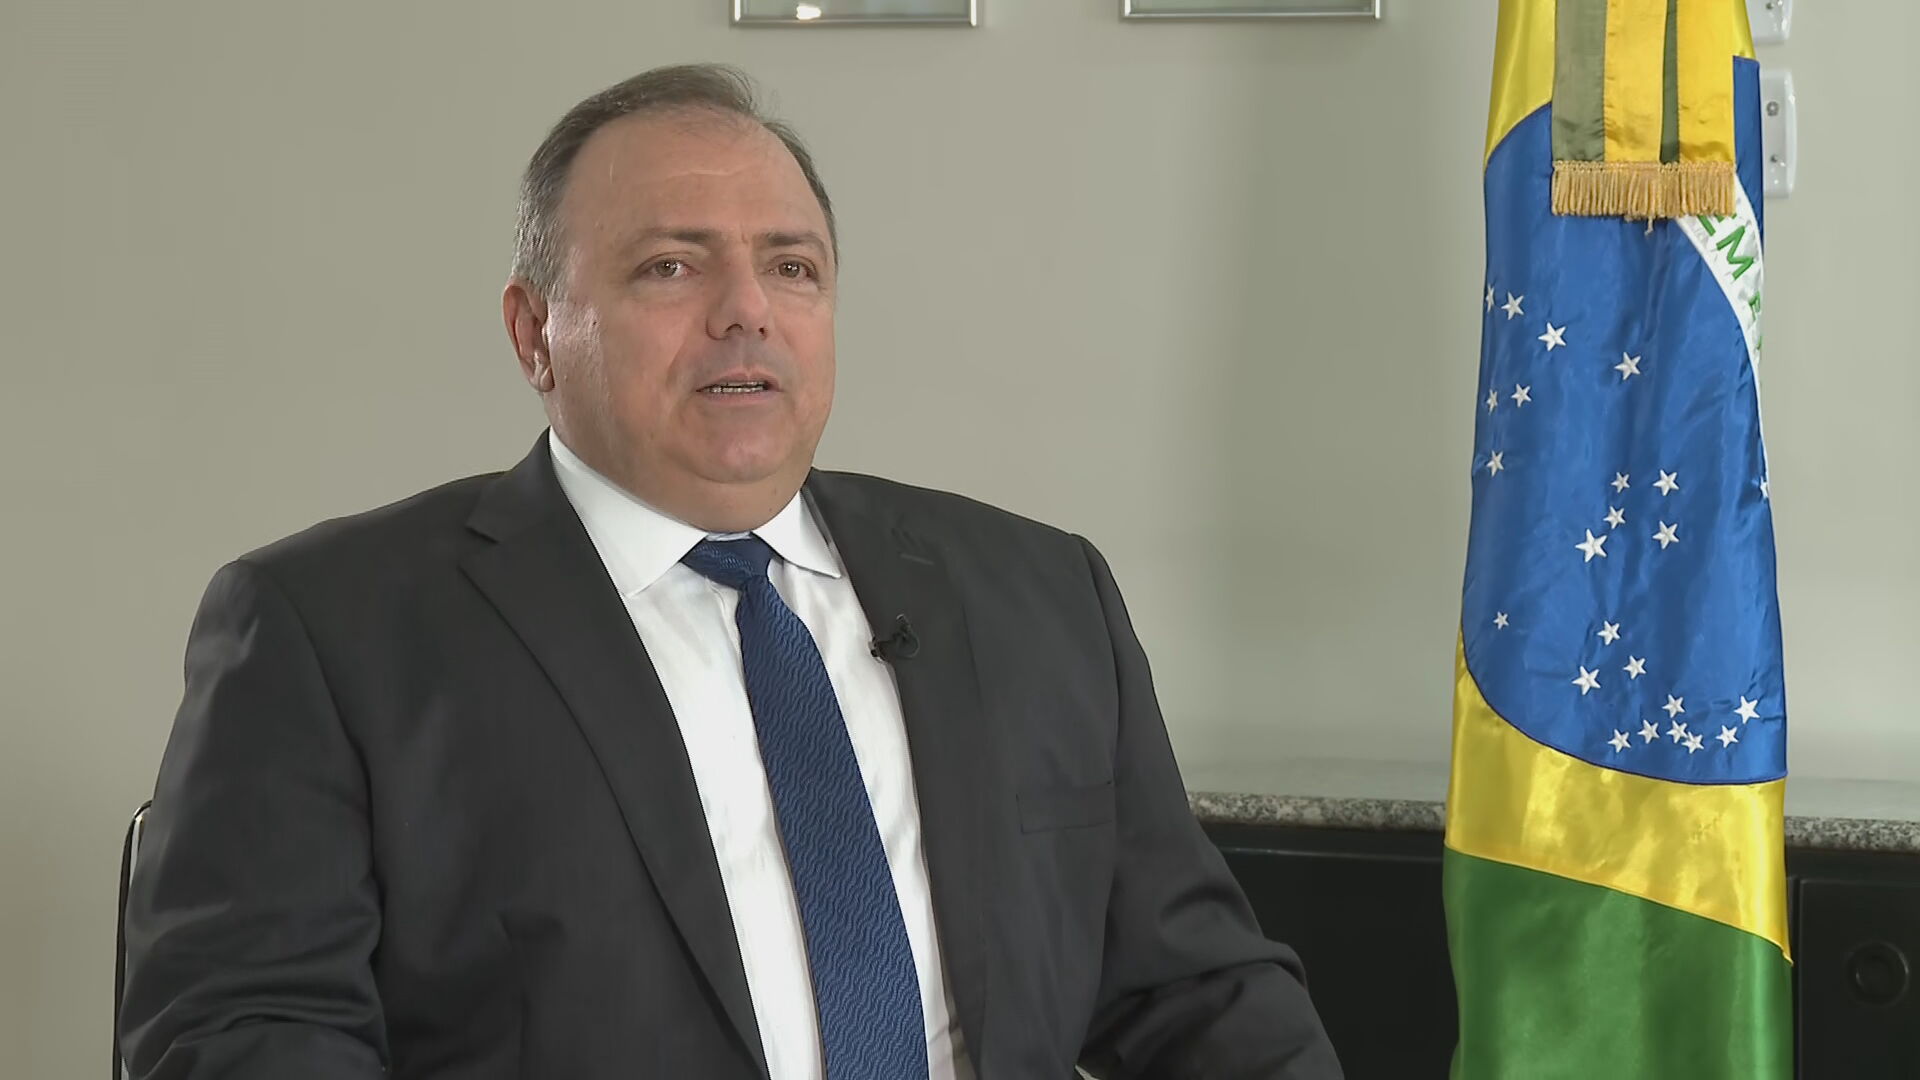 Ministro da Saúde, Eduardo Pazuello